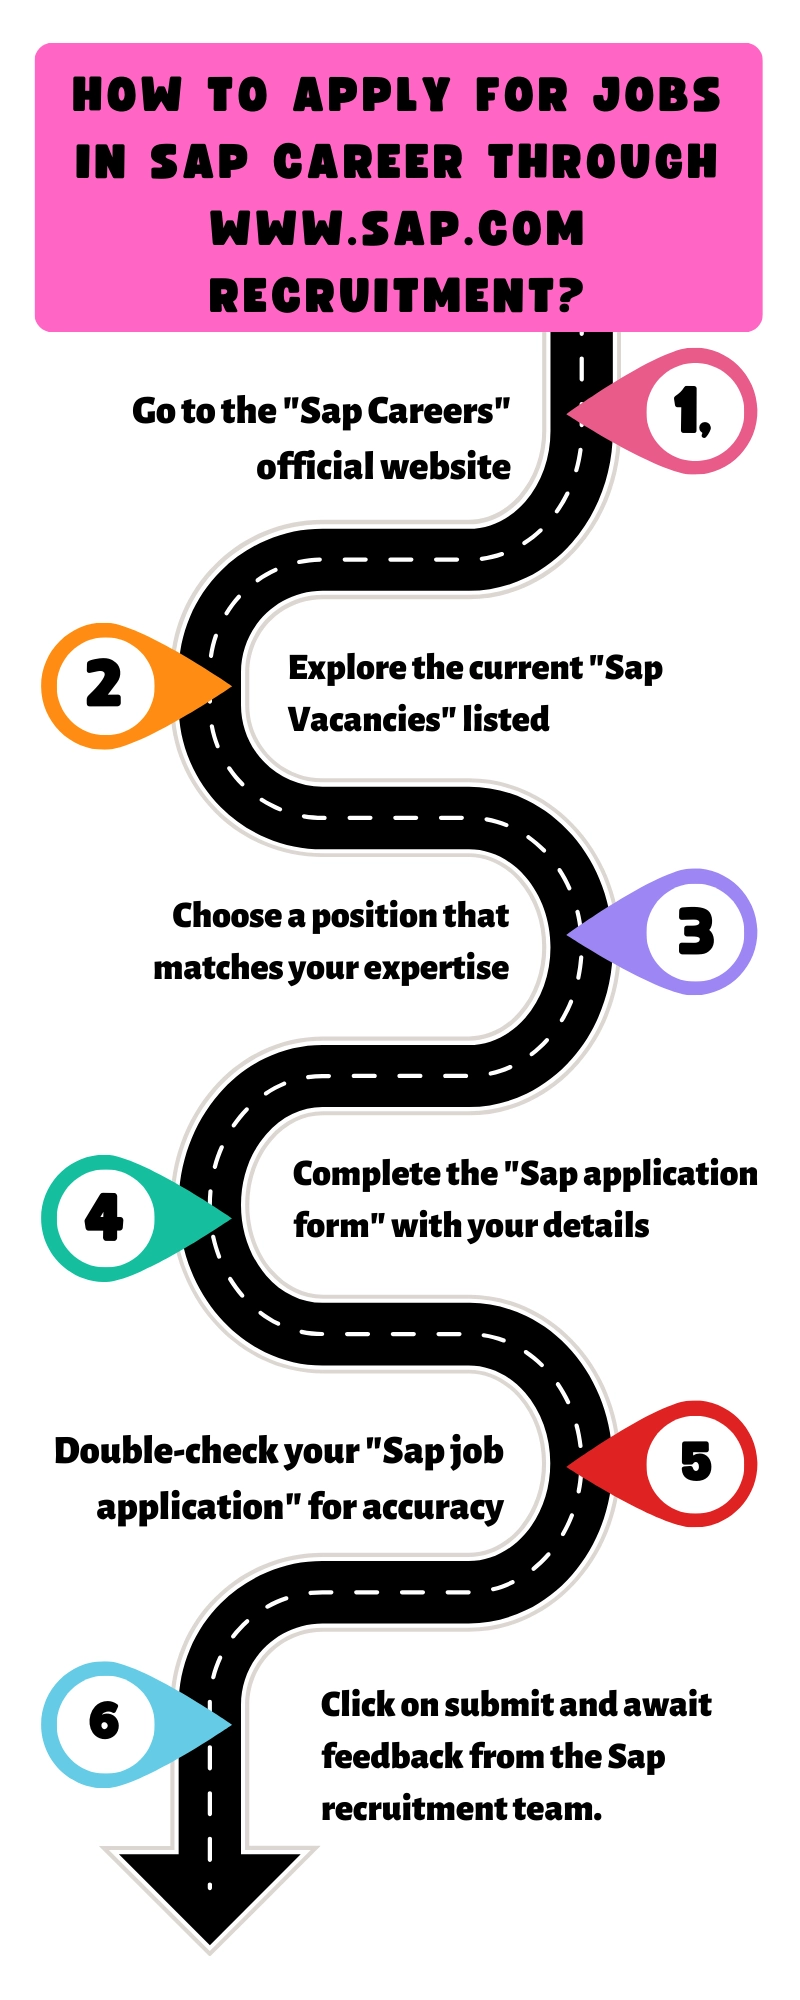 How to Apply for Jobs in Sap Career through www.sap.com recruitment?